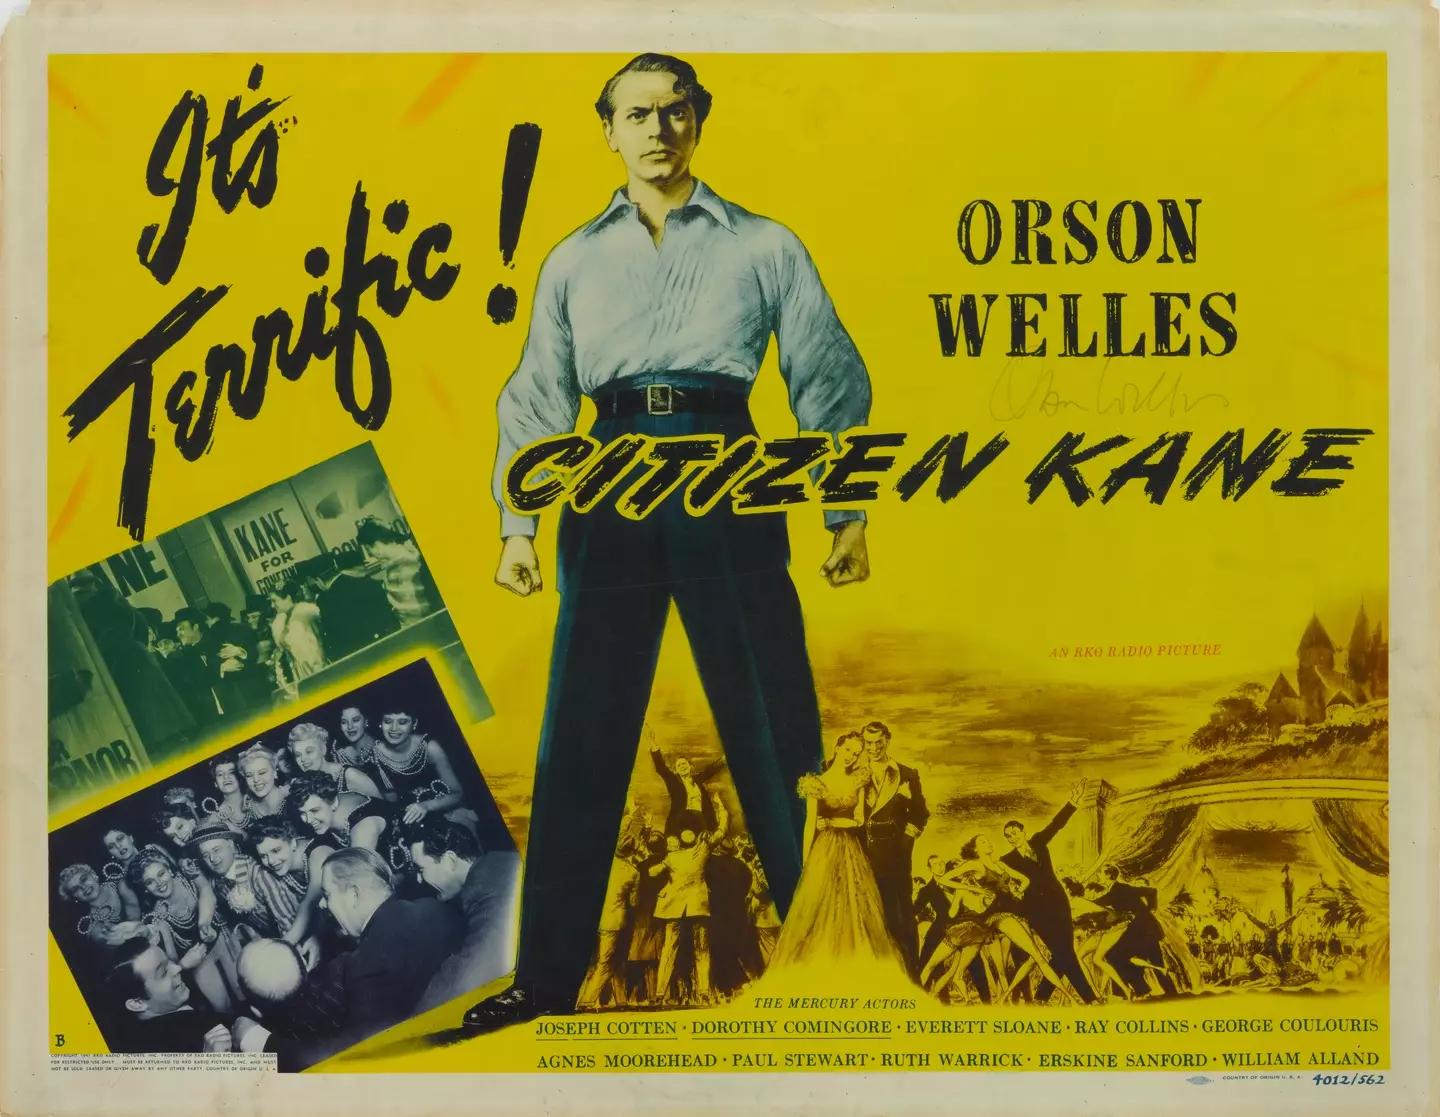 Citizen Kane by Orson Welles.